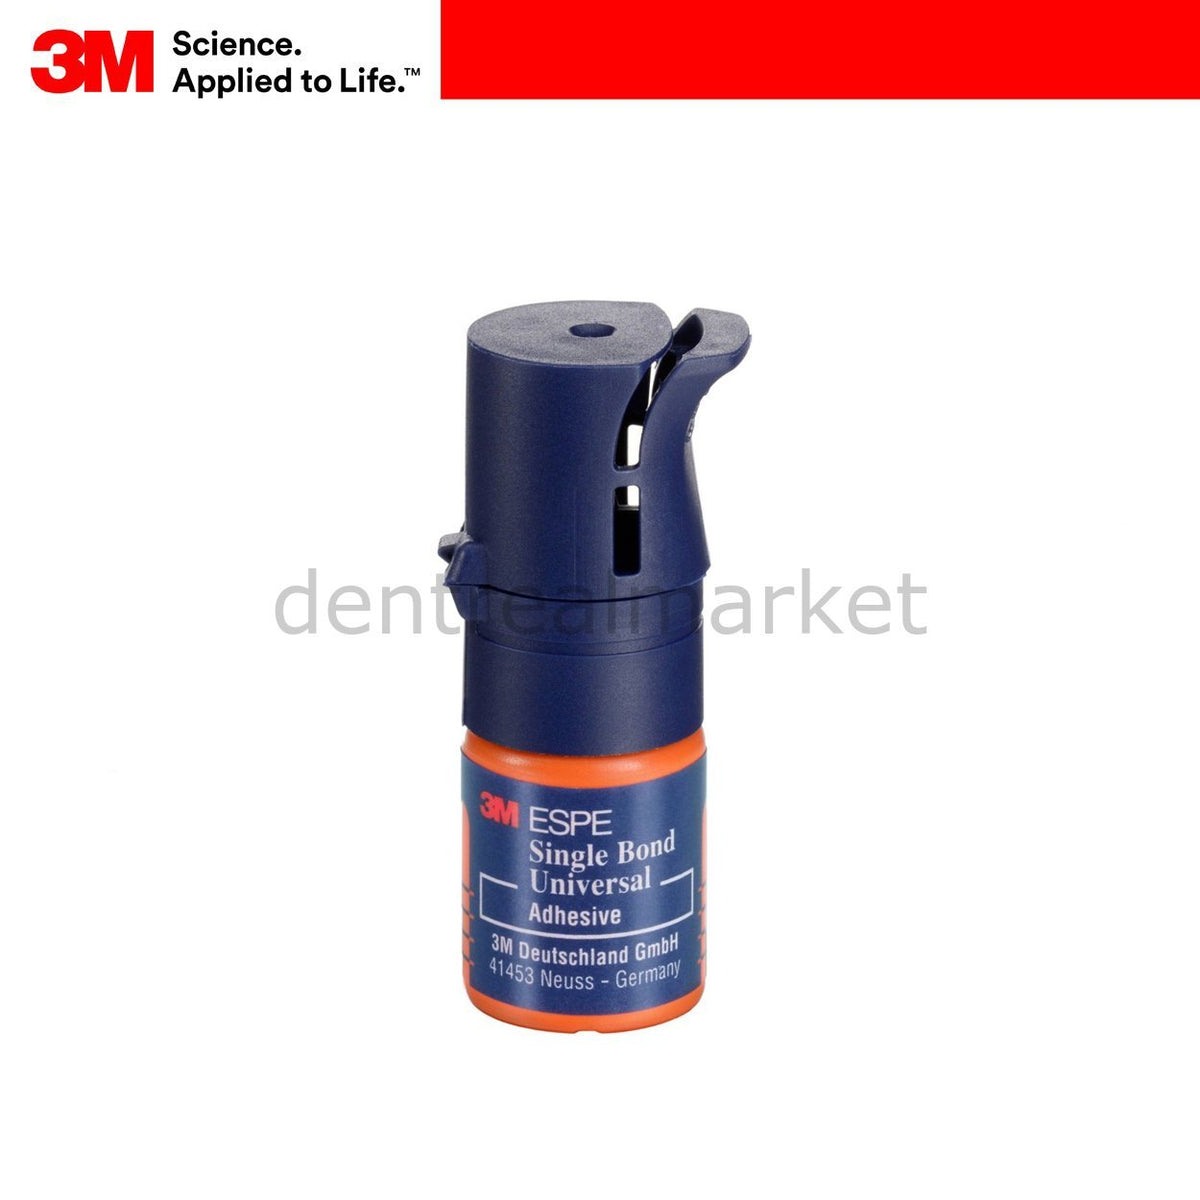 DentrealStore - 3M Singlebond Universal Bonding - Adhesive